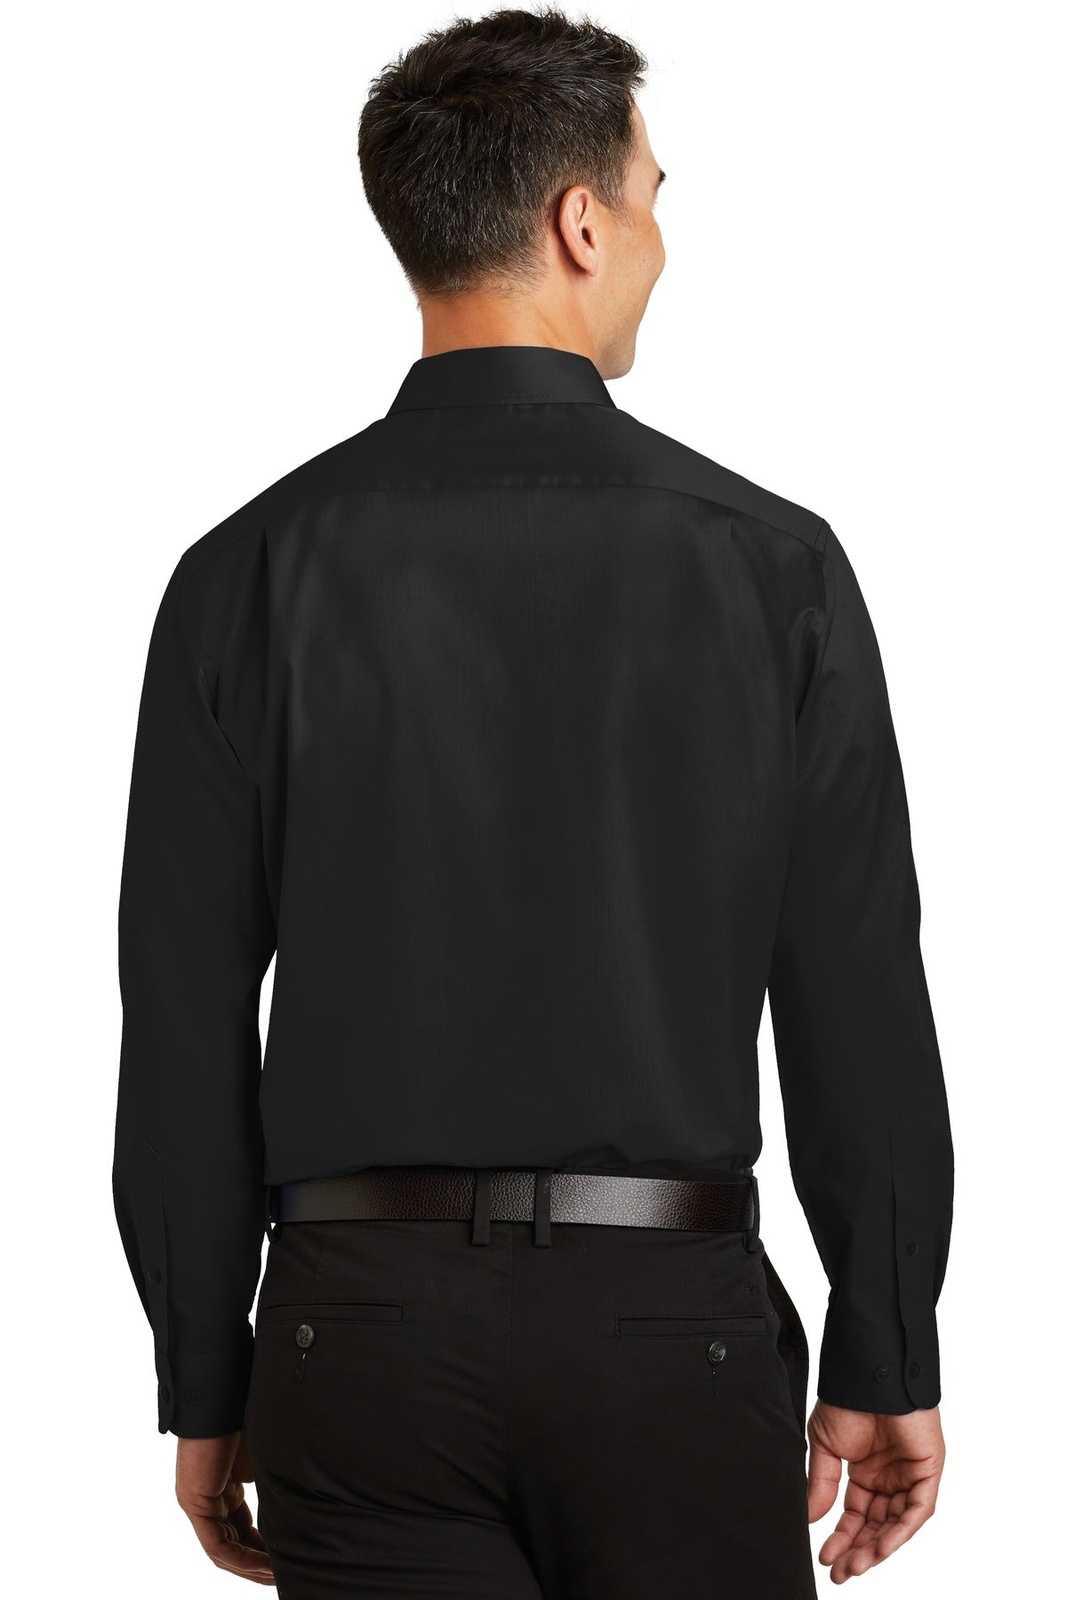 Port Authority S663 Superpro Twill Shirt - Black - HIT a Double - 2